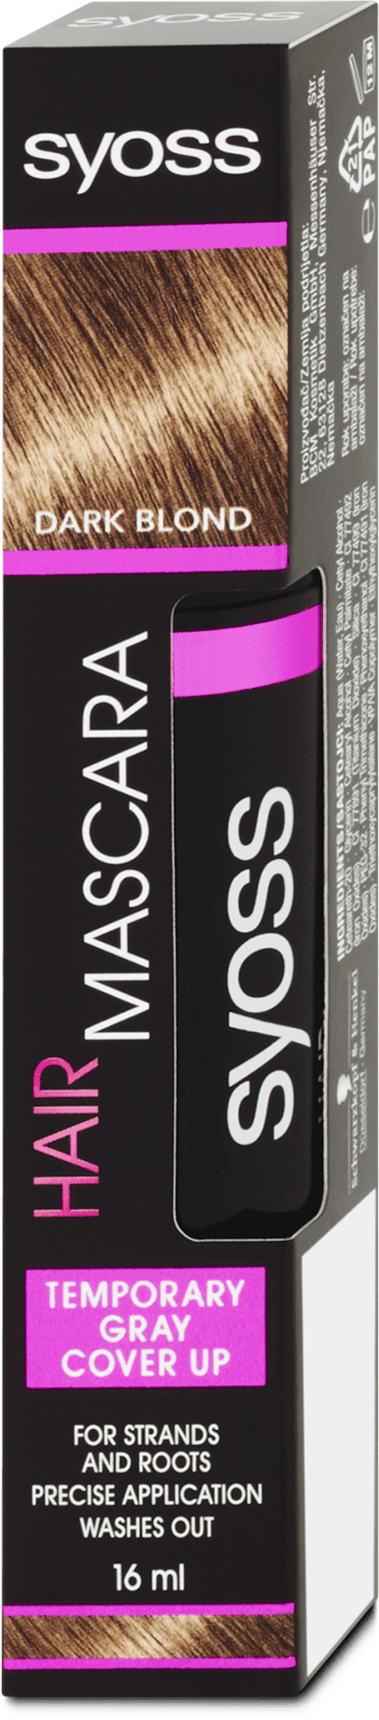 Syoss Dark Blond hair mascara, 16 ml